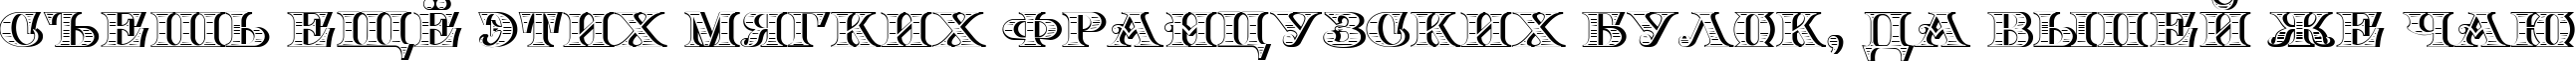 Пример написания шрифтом Arkadia текста на русском